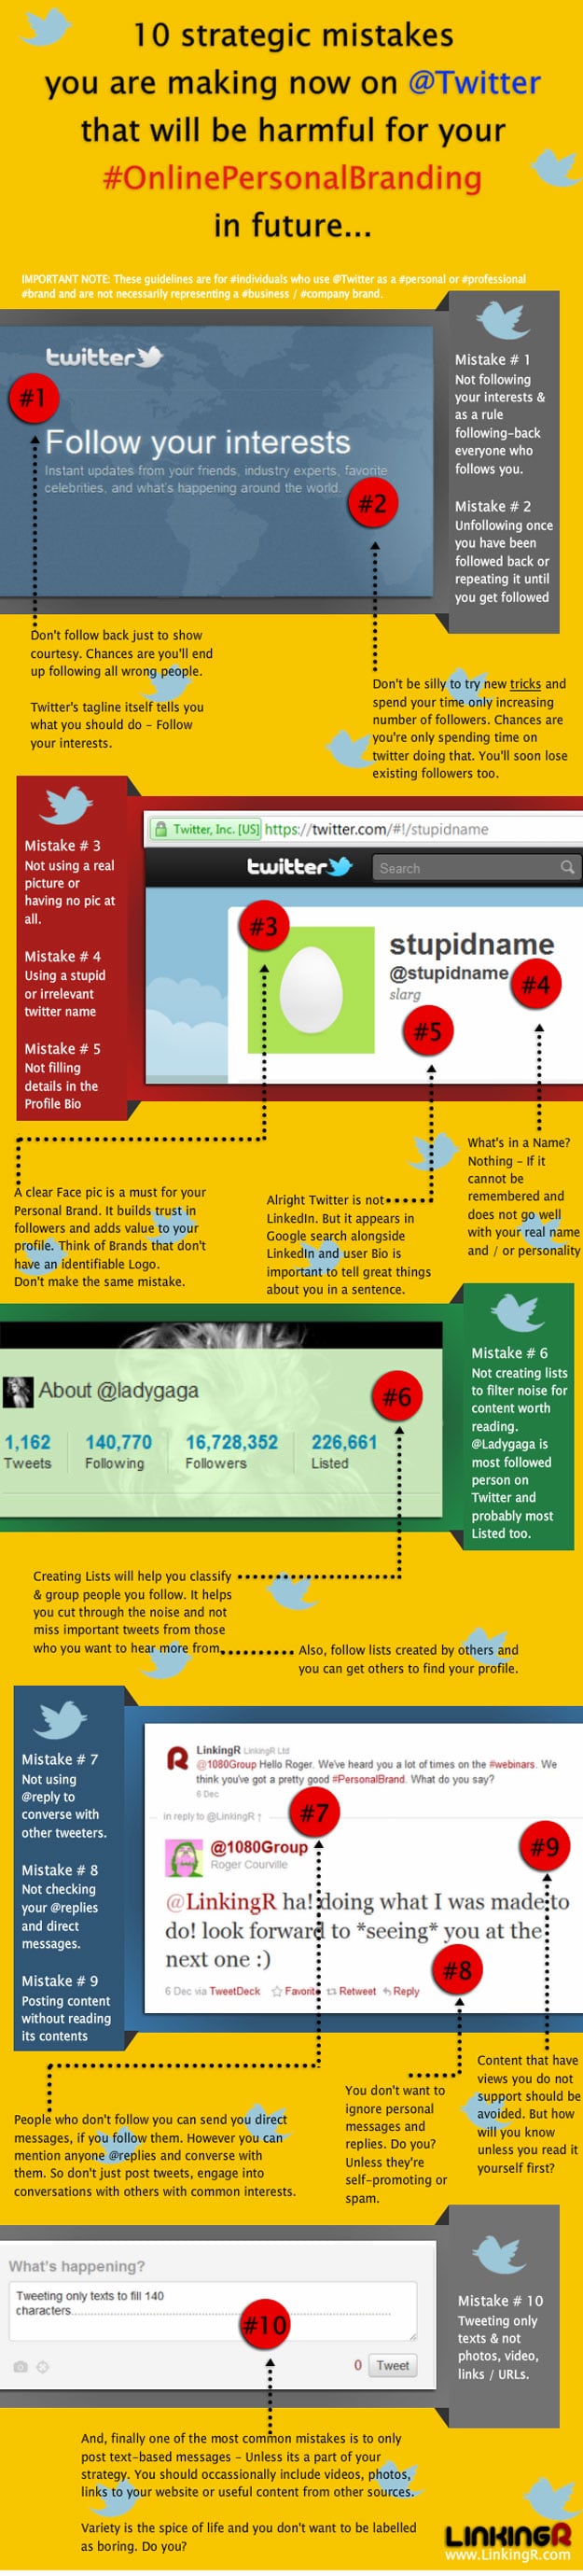 Twitter-Online-Branding-Mistakes-infographic